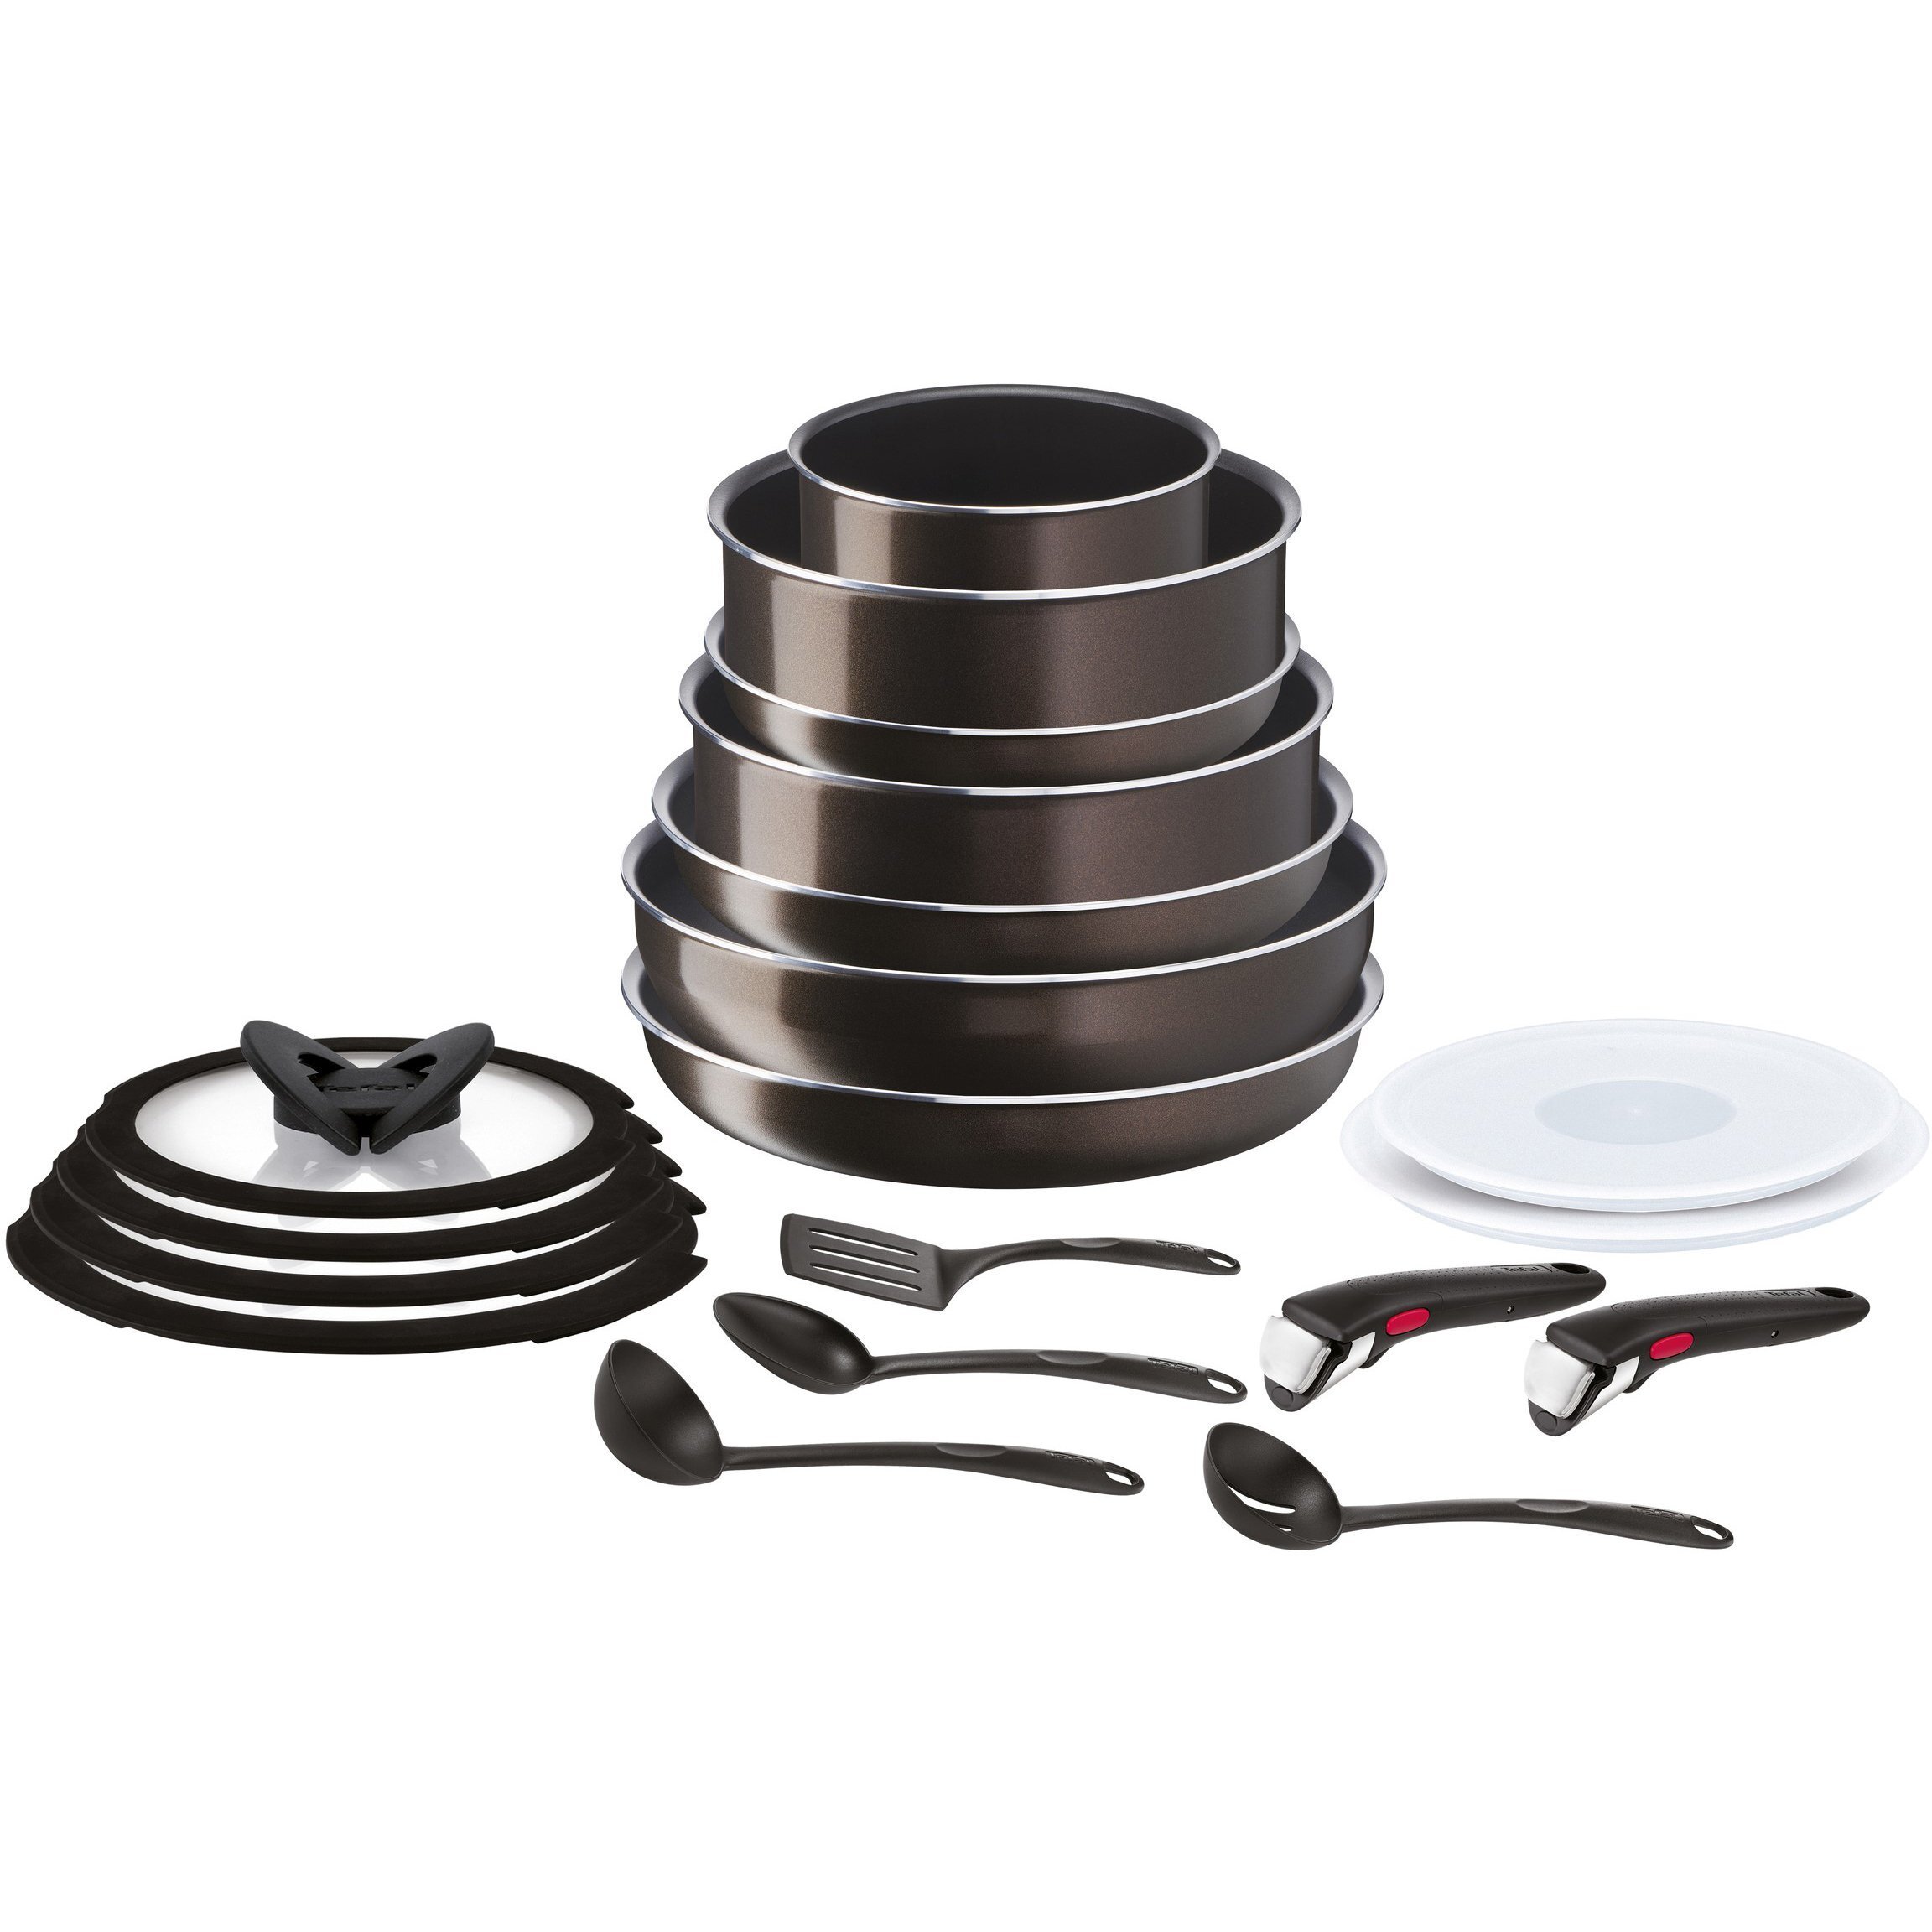 Набор посуды Tefal Ingenio XL Intense, 19 предметов (L1509973) фото 1